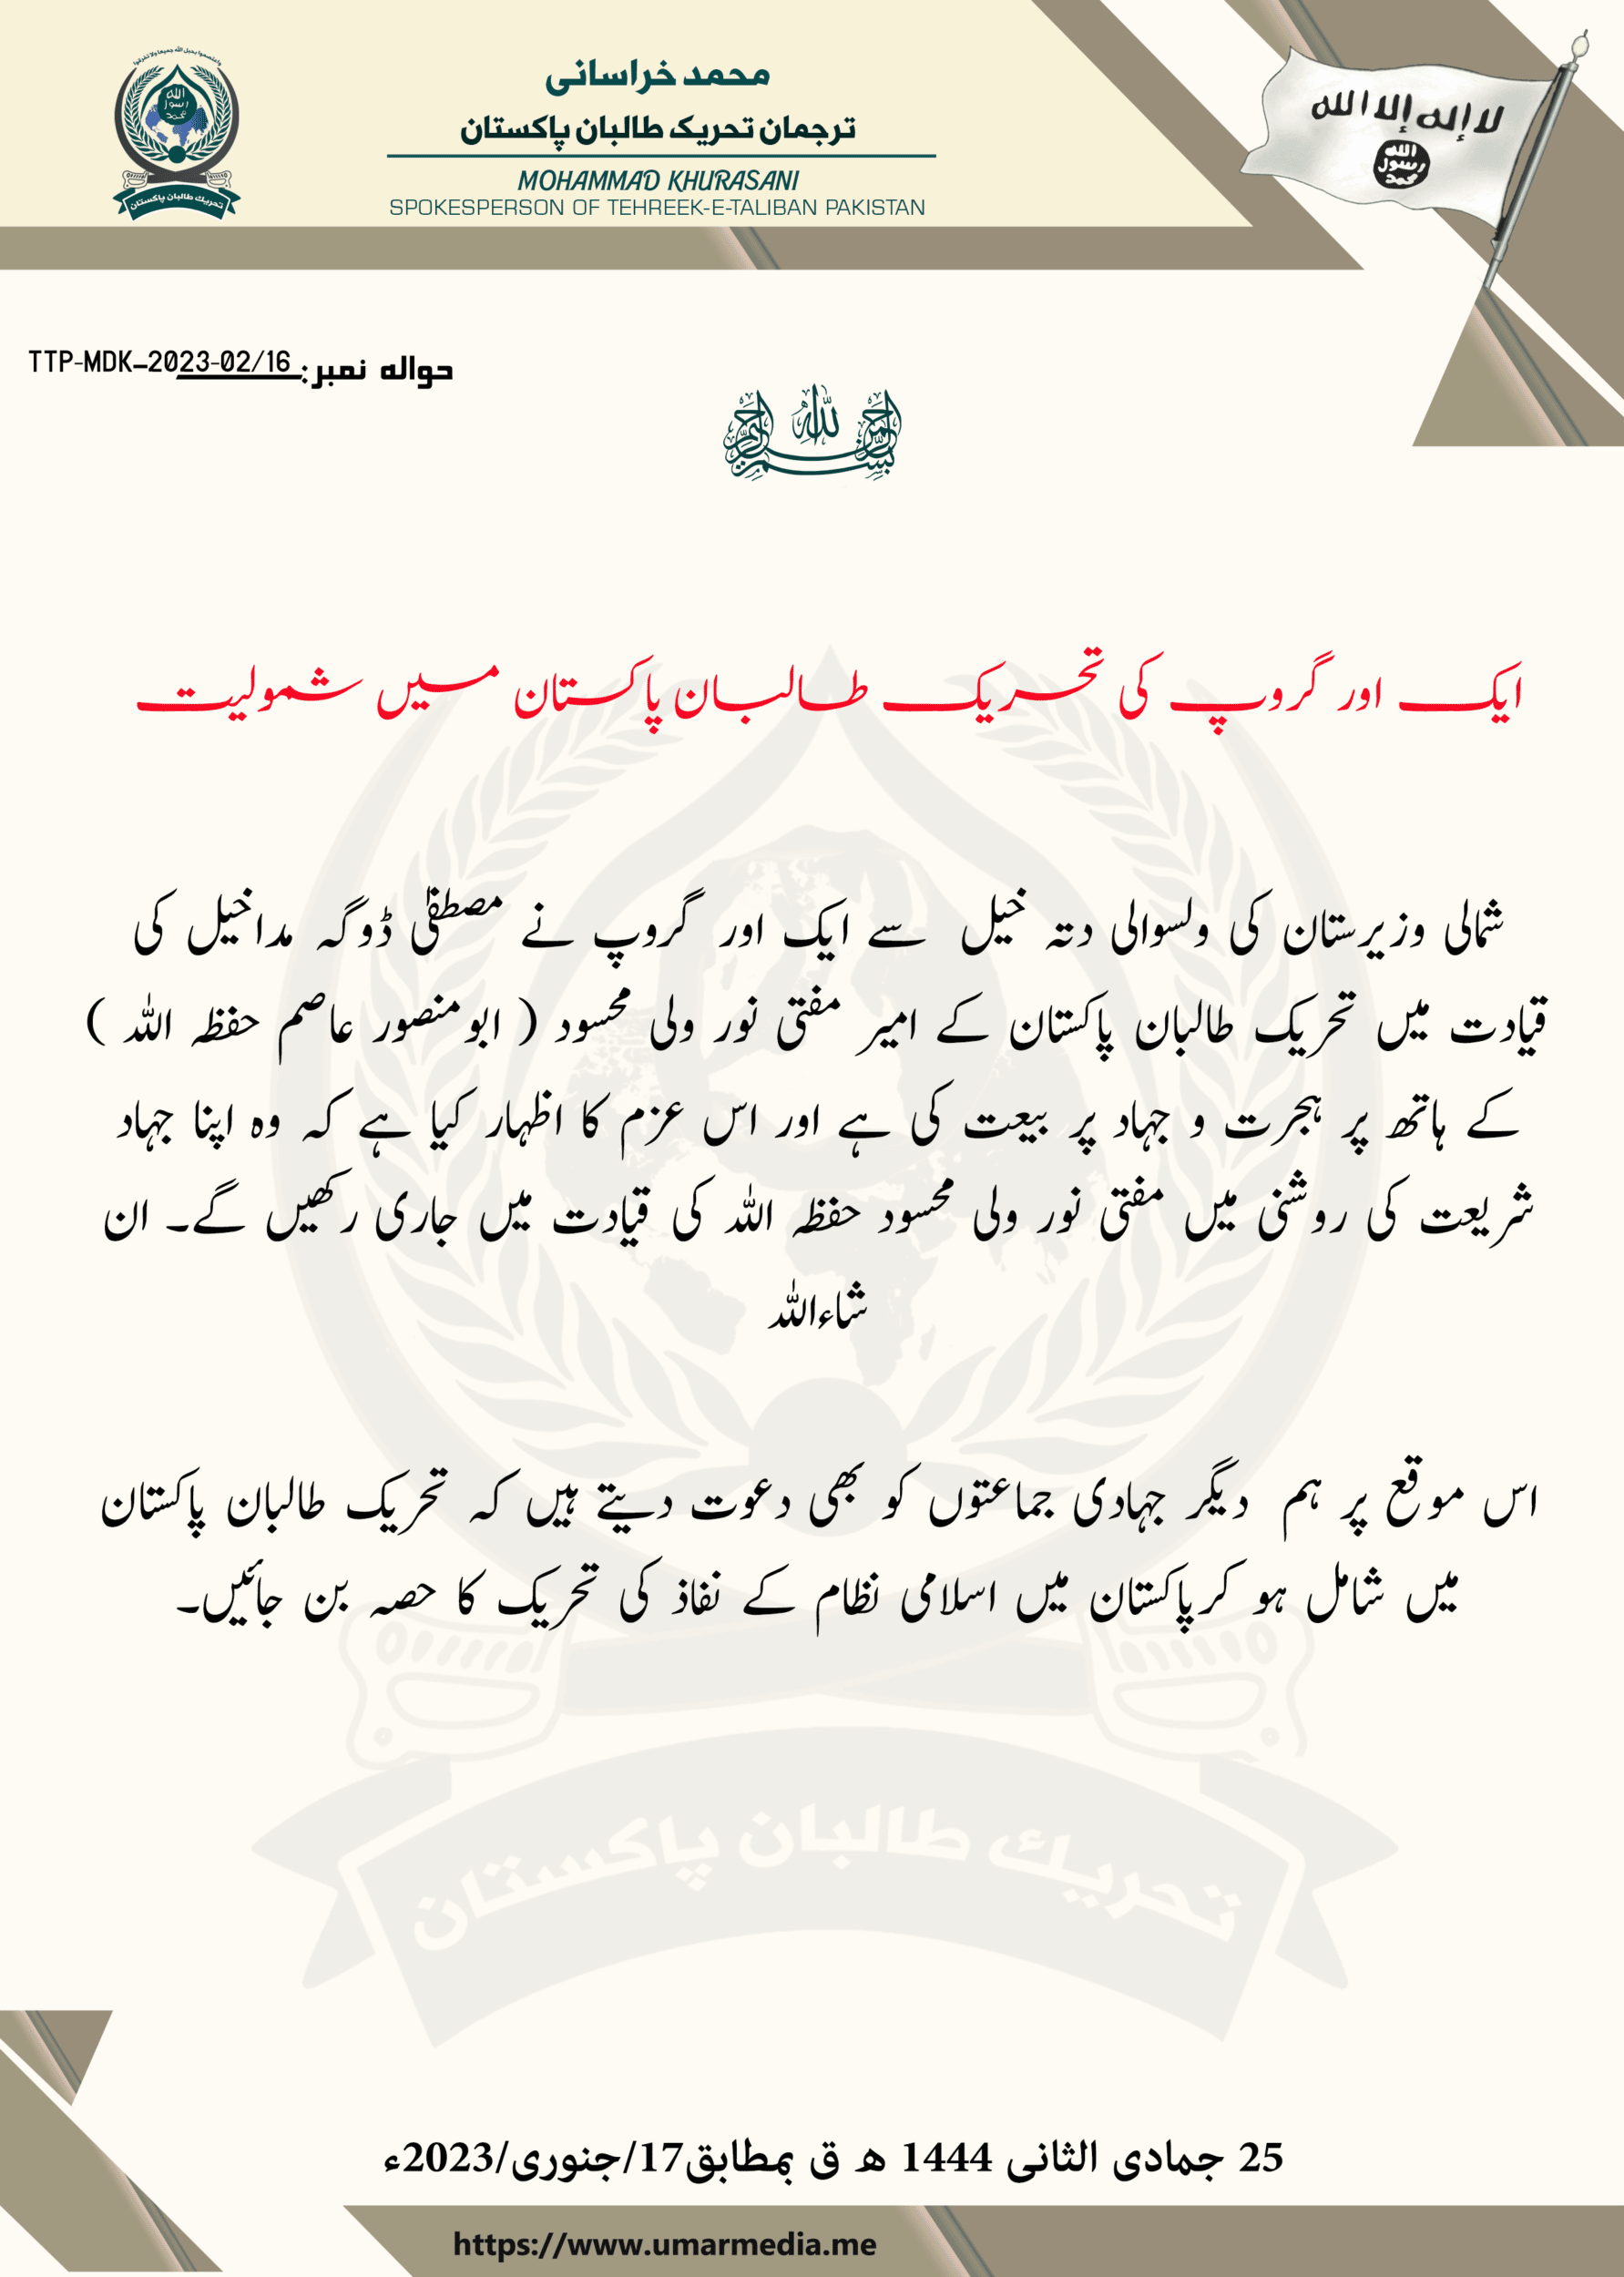 (Statement) A new Group from Datta Khel District, under the Leadership of Mustafa Doga Madakhel, Pledged Allegiance to Mufti Noor Wali Mehsud of Tehreek-e-Taliban Pakistan (TTP) - 17 January 2023 